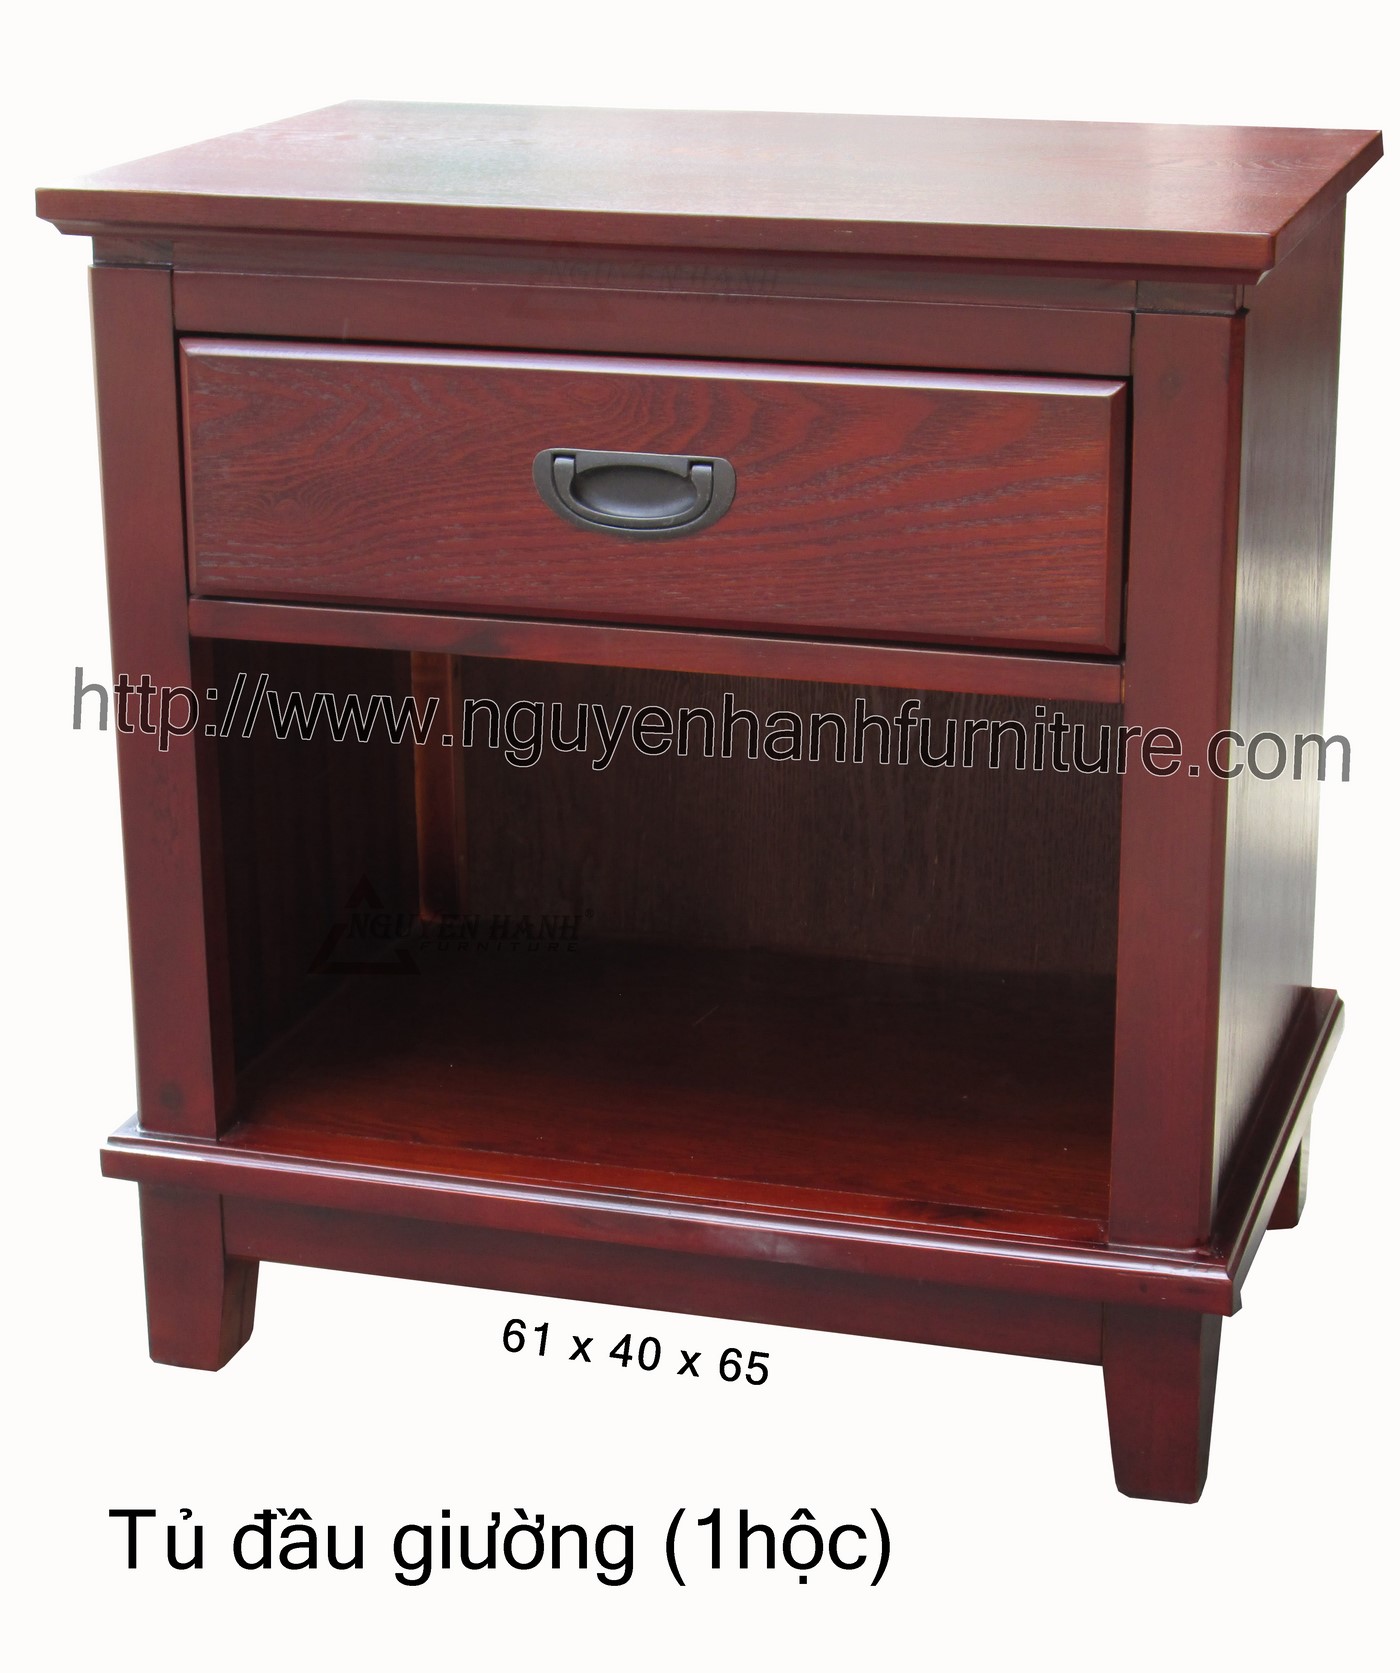 Name product: Headboard cabinet - Dimensions: 61 x 40 x 65 - Description: 